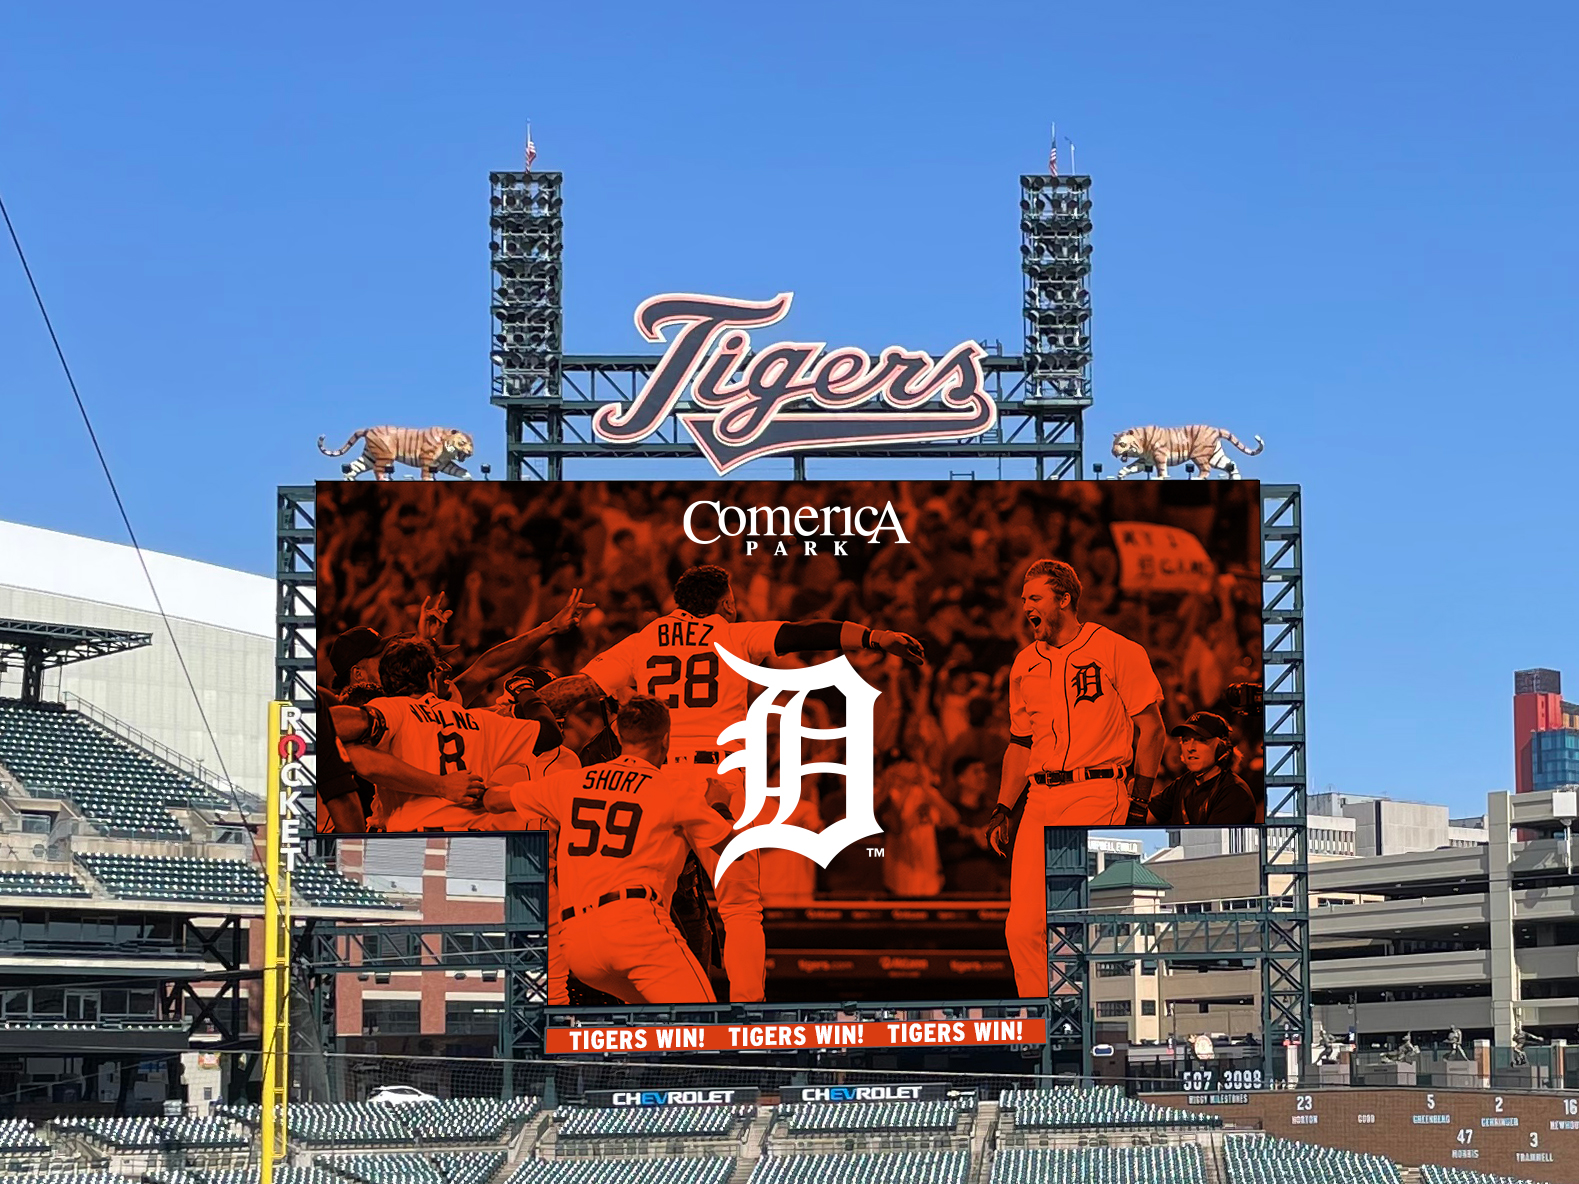 Detroit Tigers Artist's Rendering